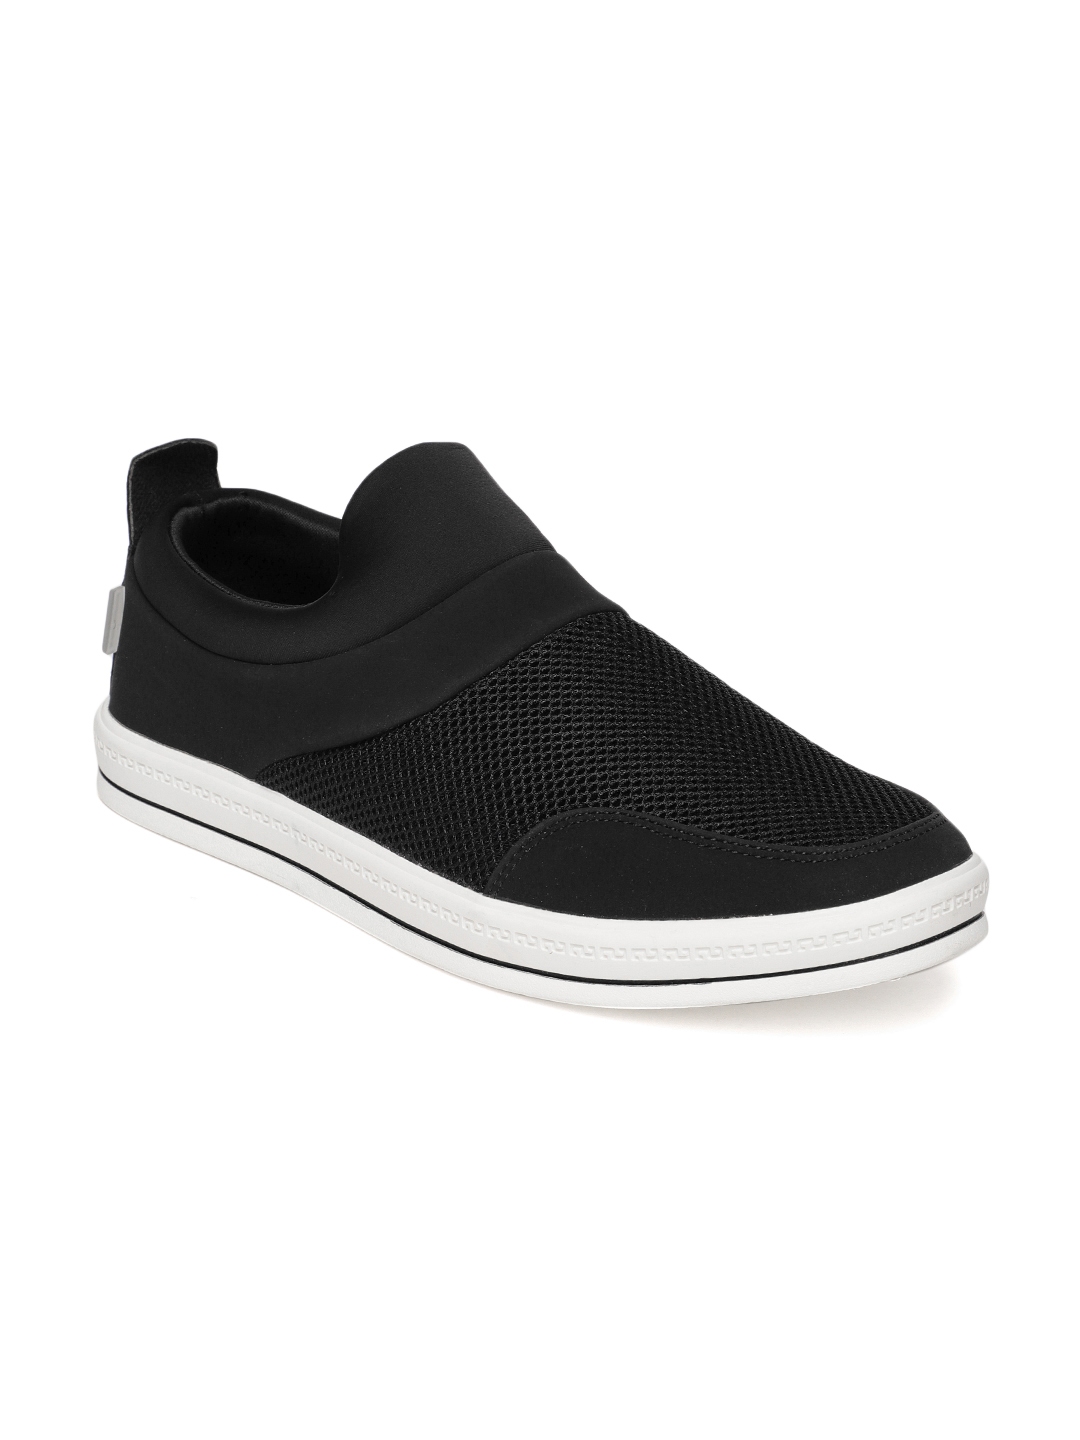 Buy Flying Machine Men Black Slip On Sneakers - Casual Shoes for Men ...